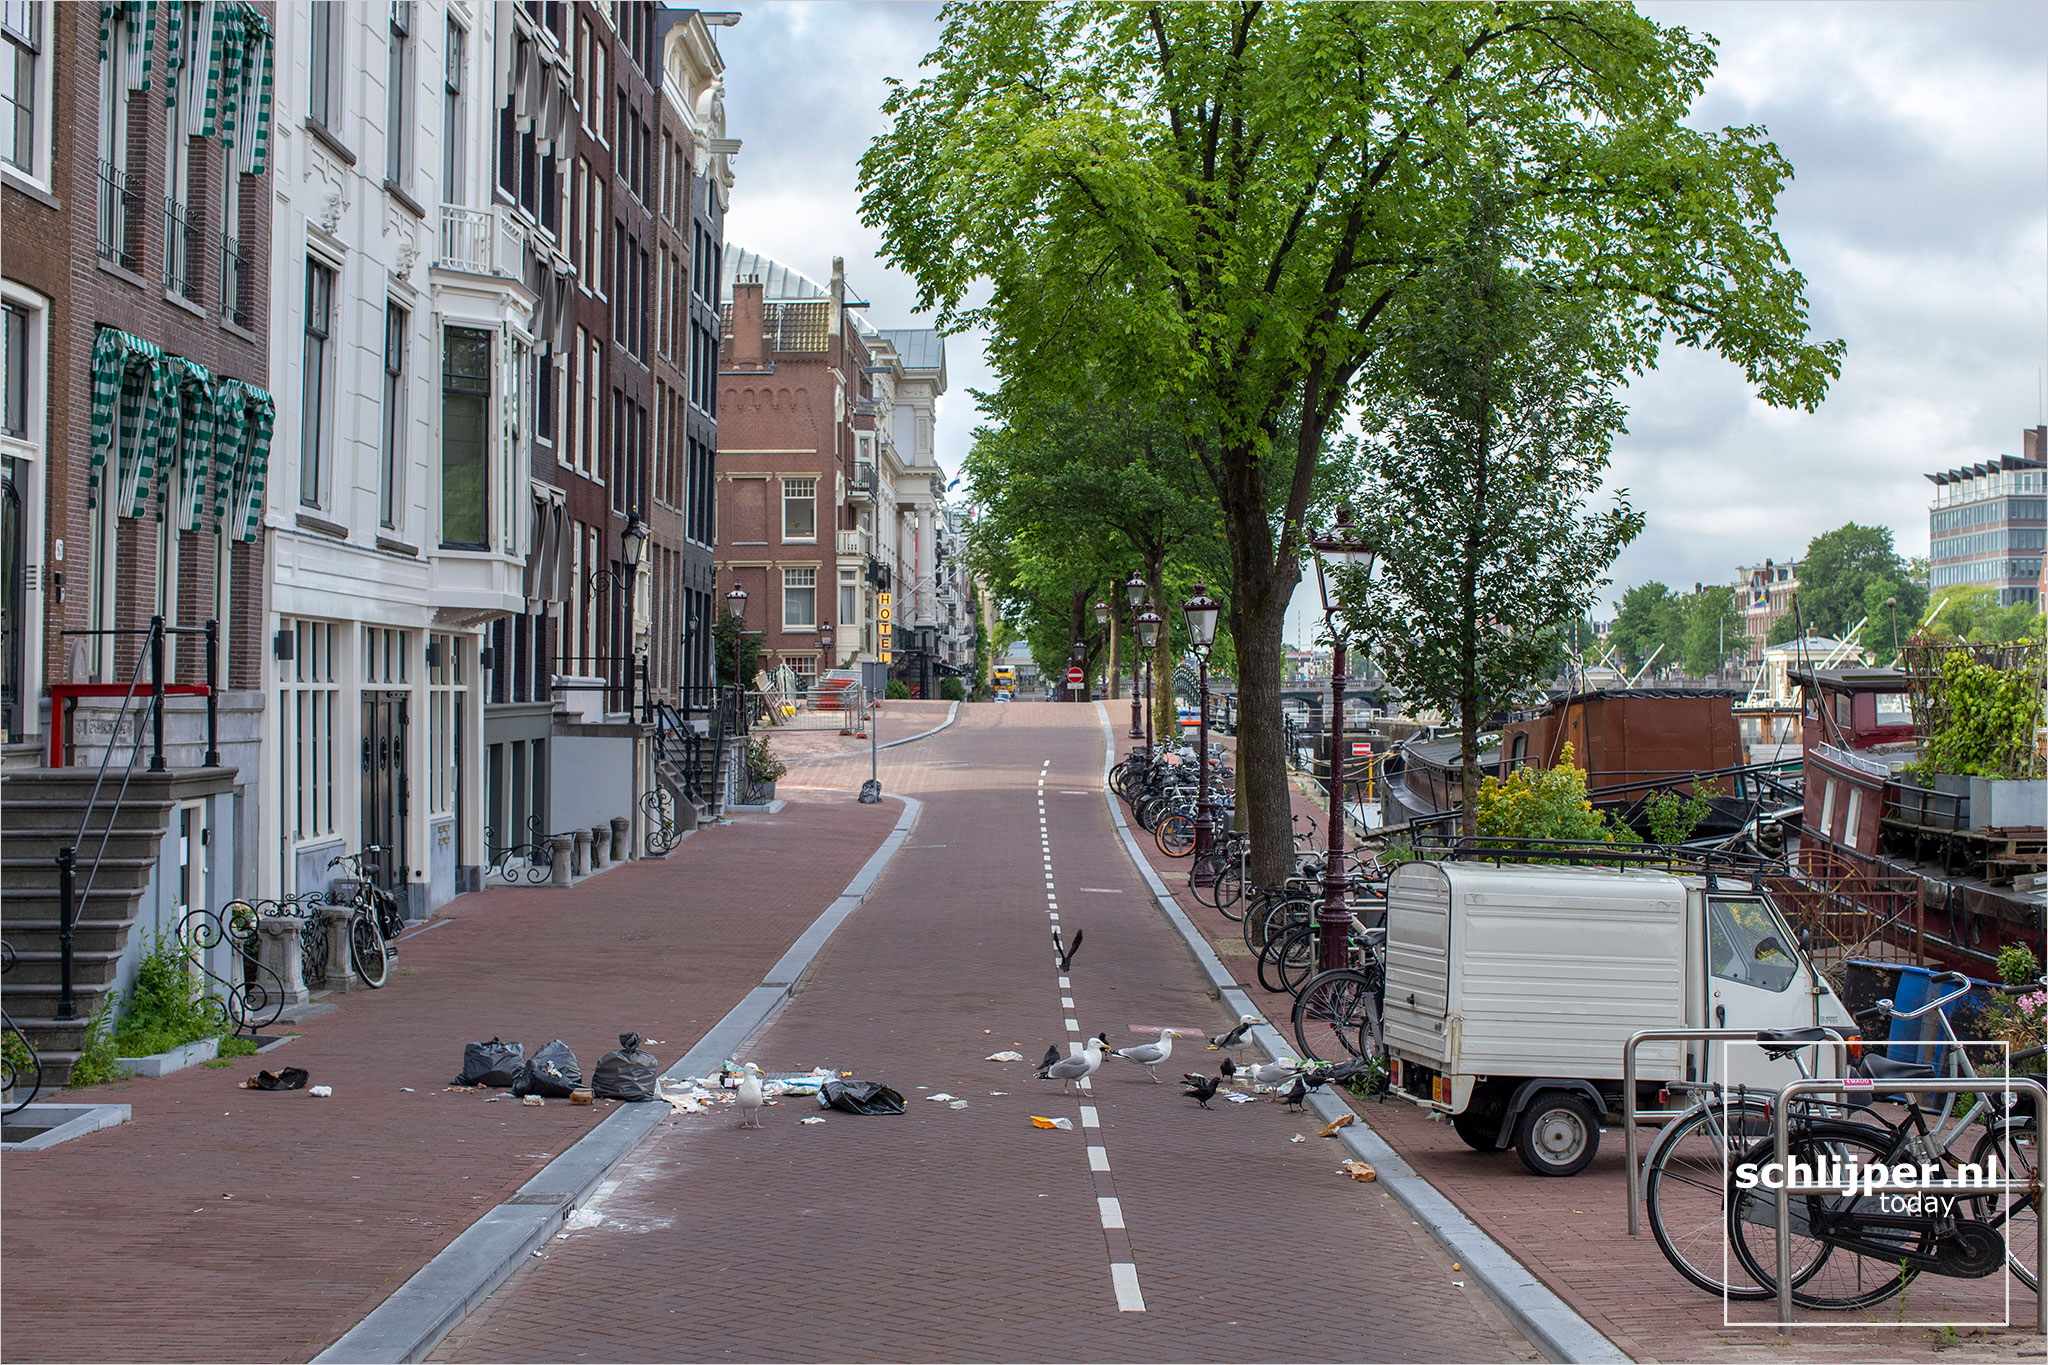 Nederland, Amsterdam, 20 juni 2020